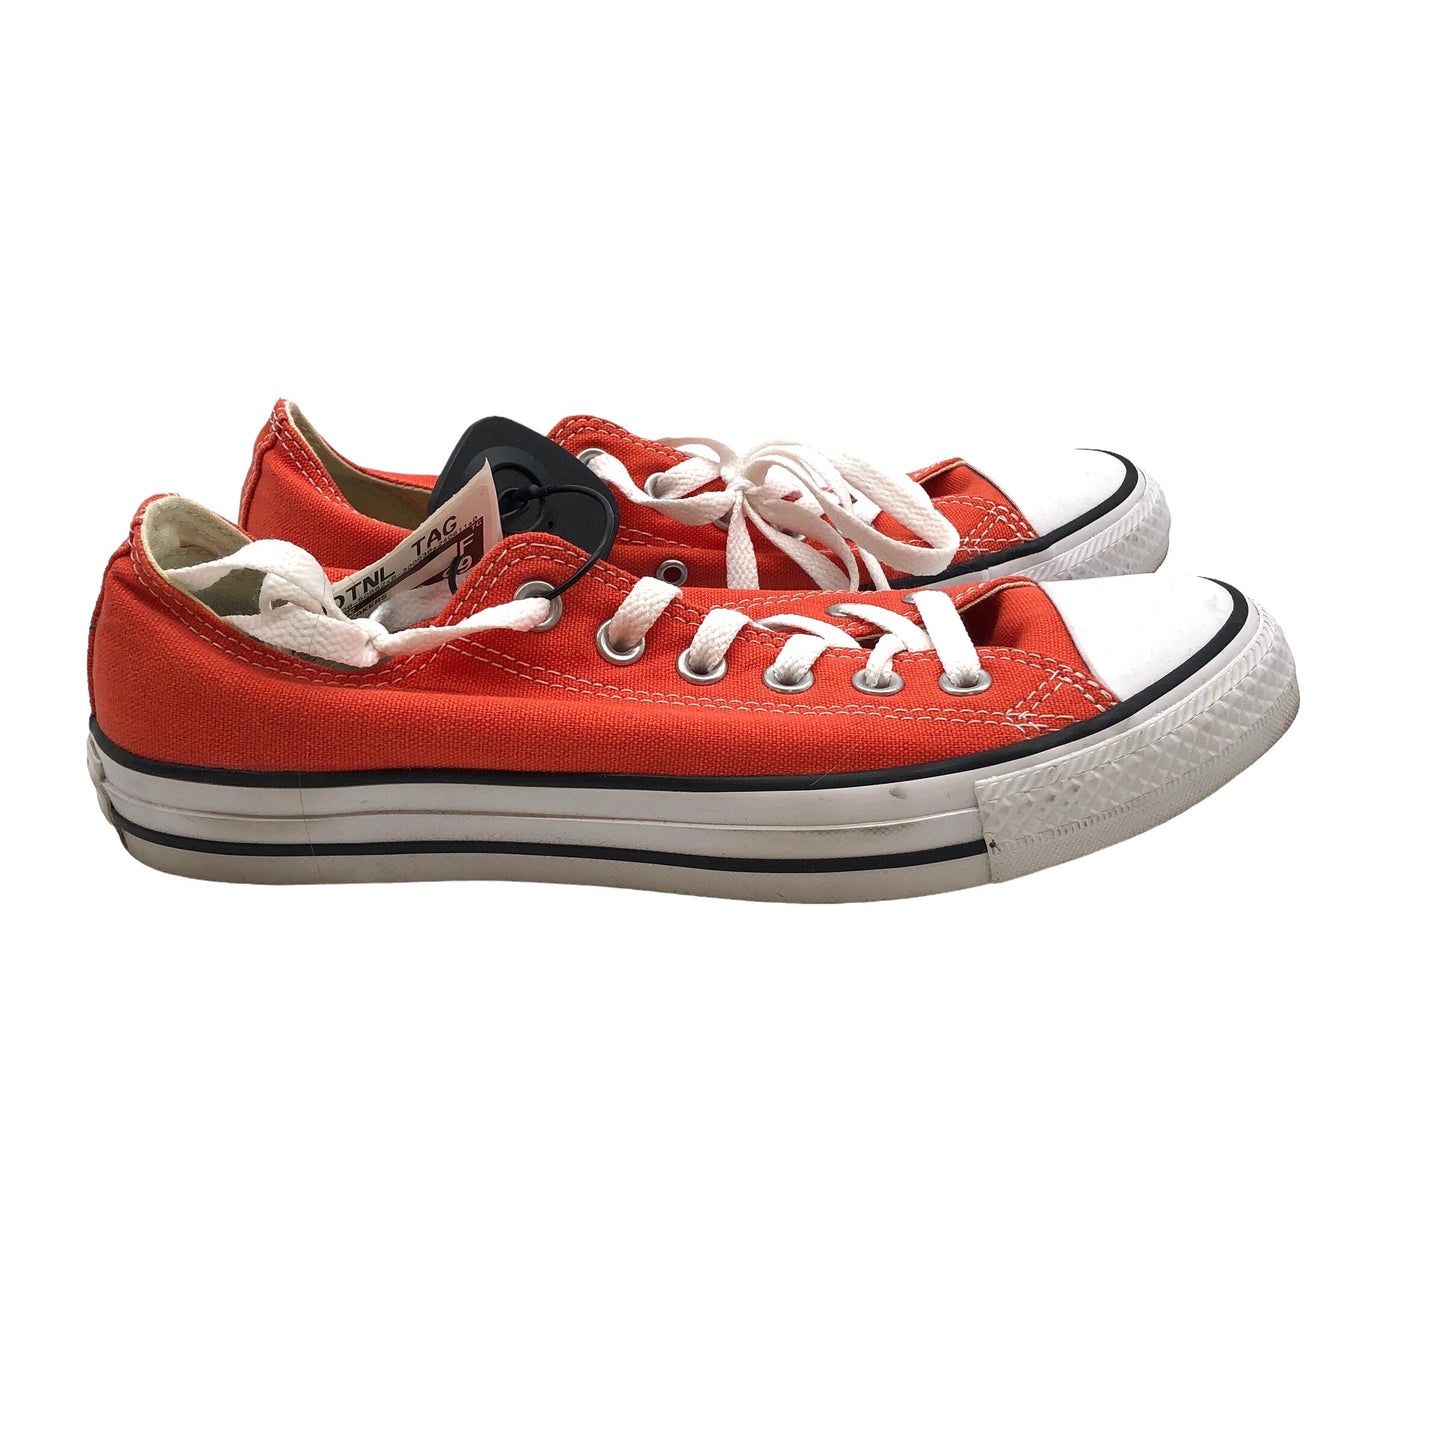 Orange Shoes Sneakers Converse, Size 8